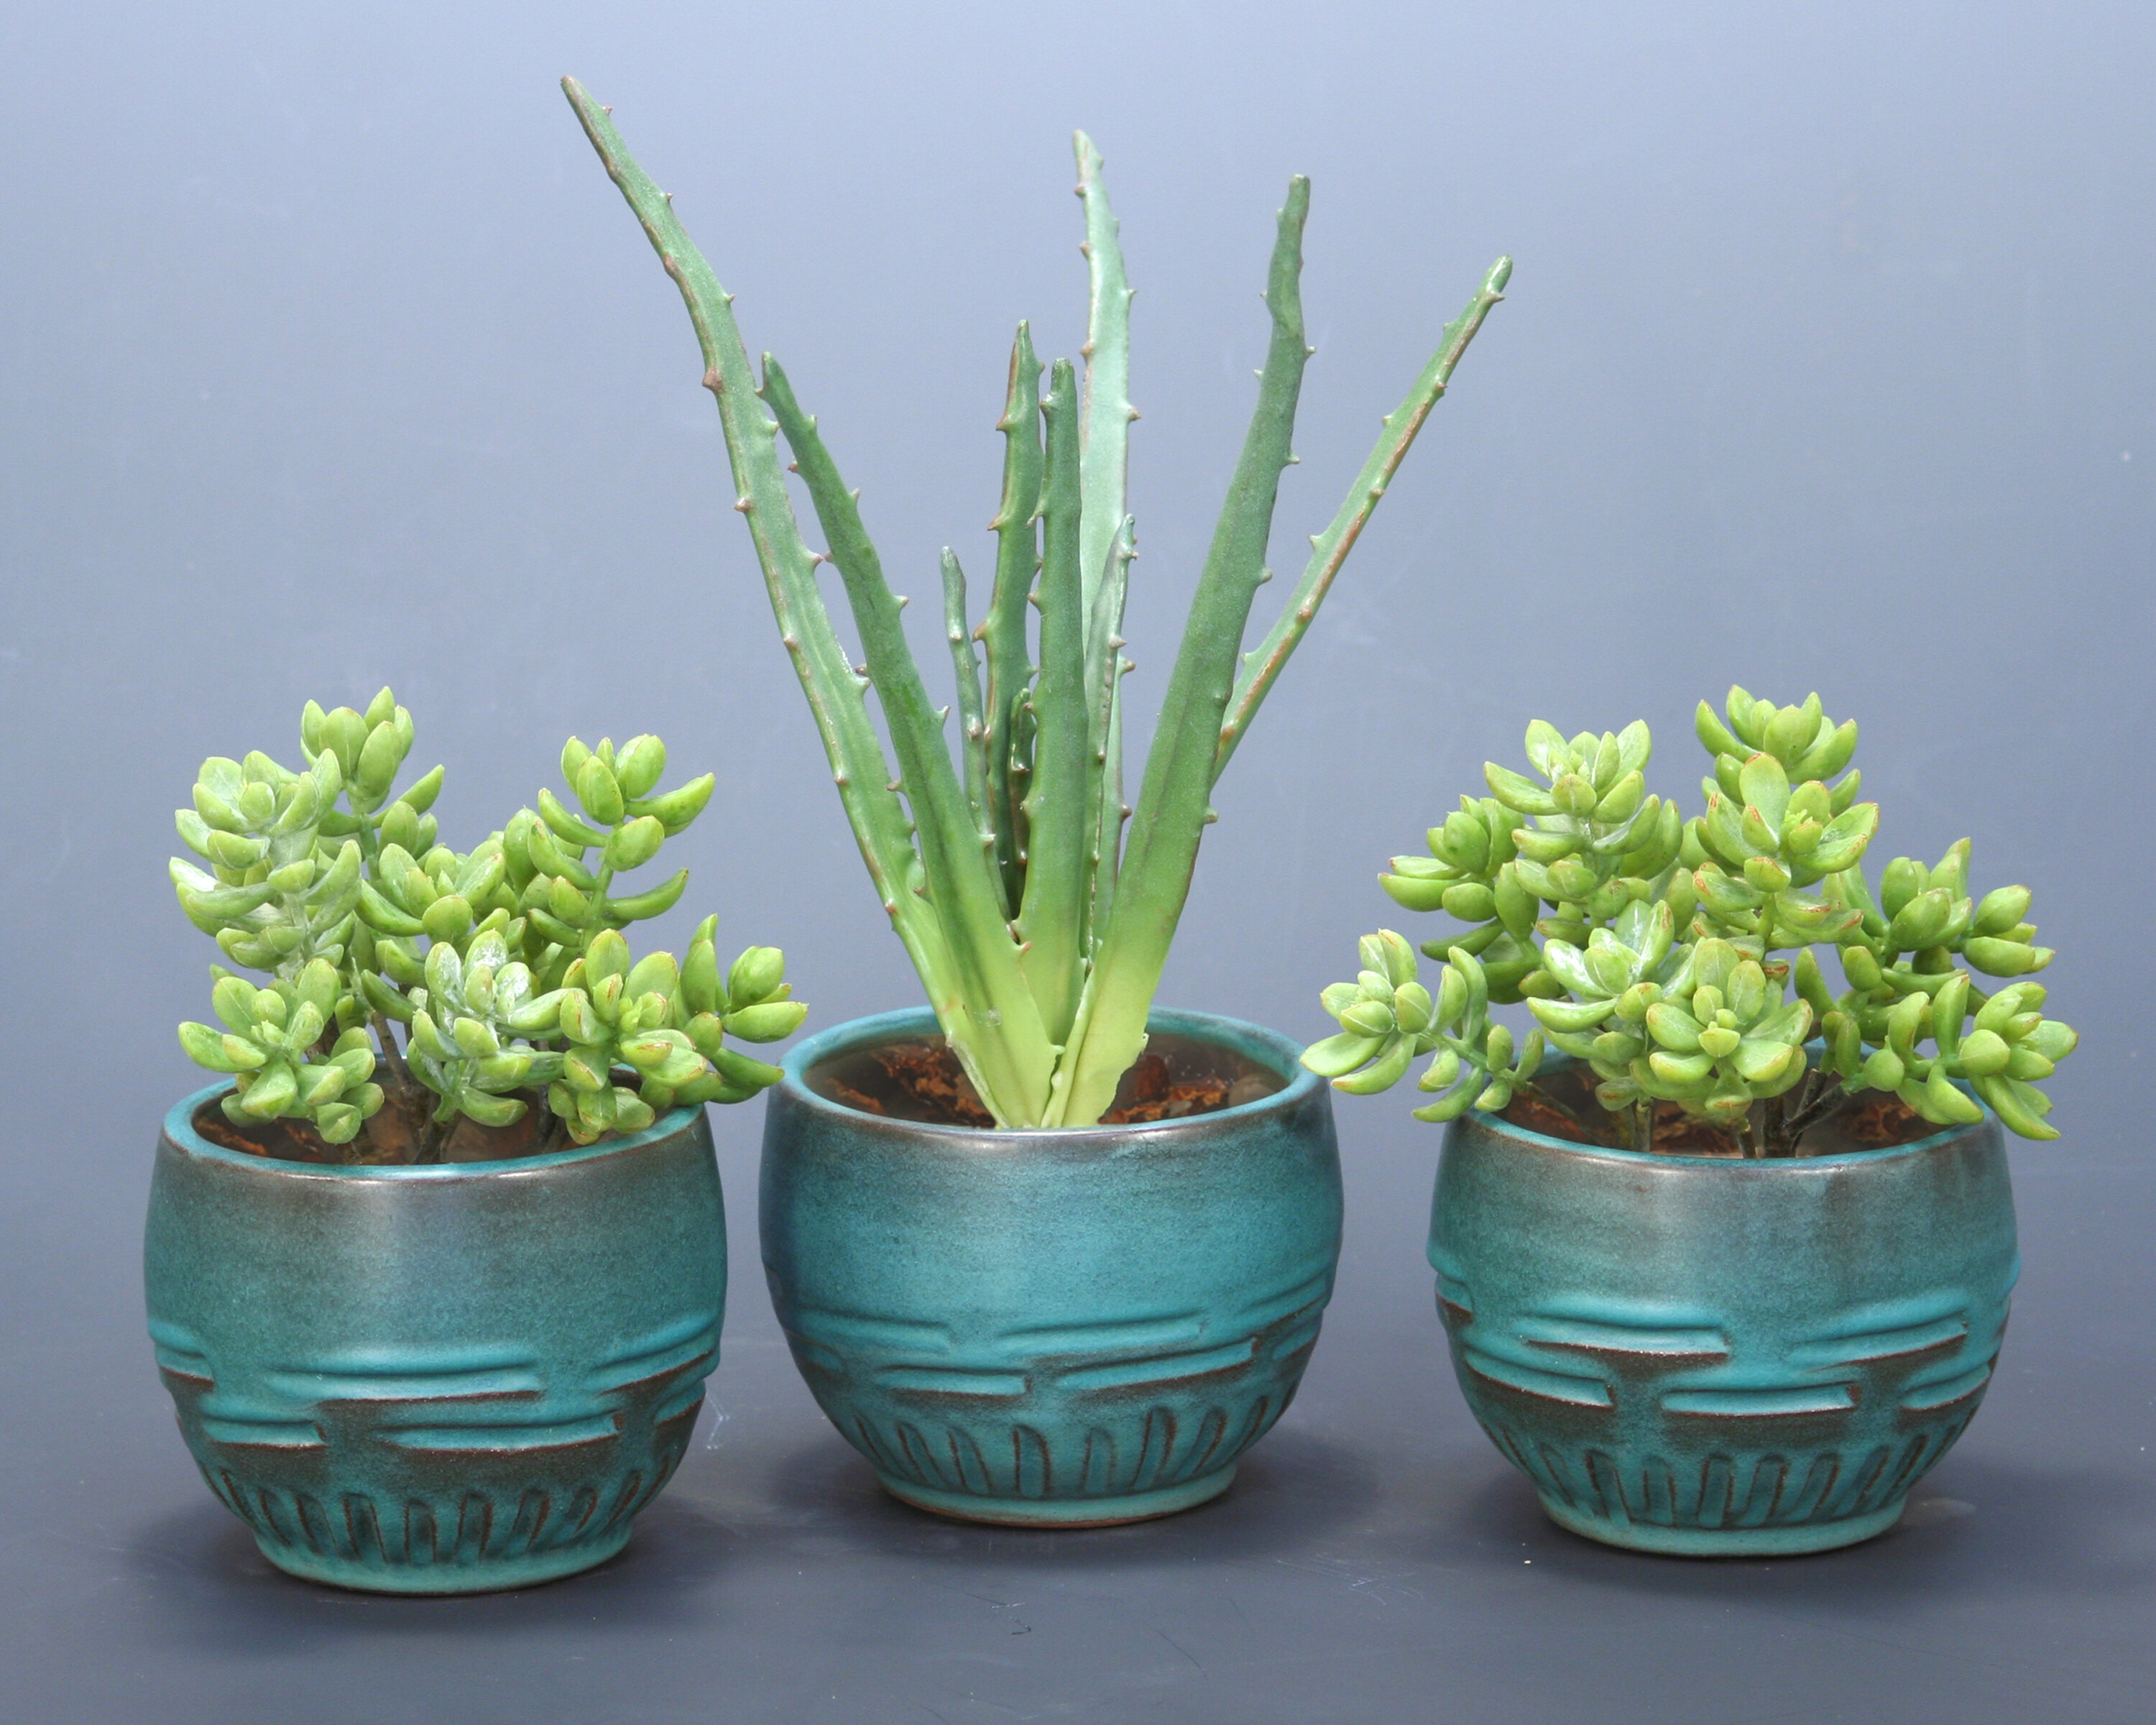 Pack of 4 Ceramic Potted Fake Desk Plant Premium Artificial Succulents in Pots